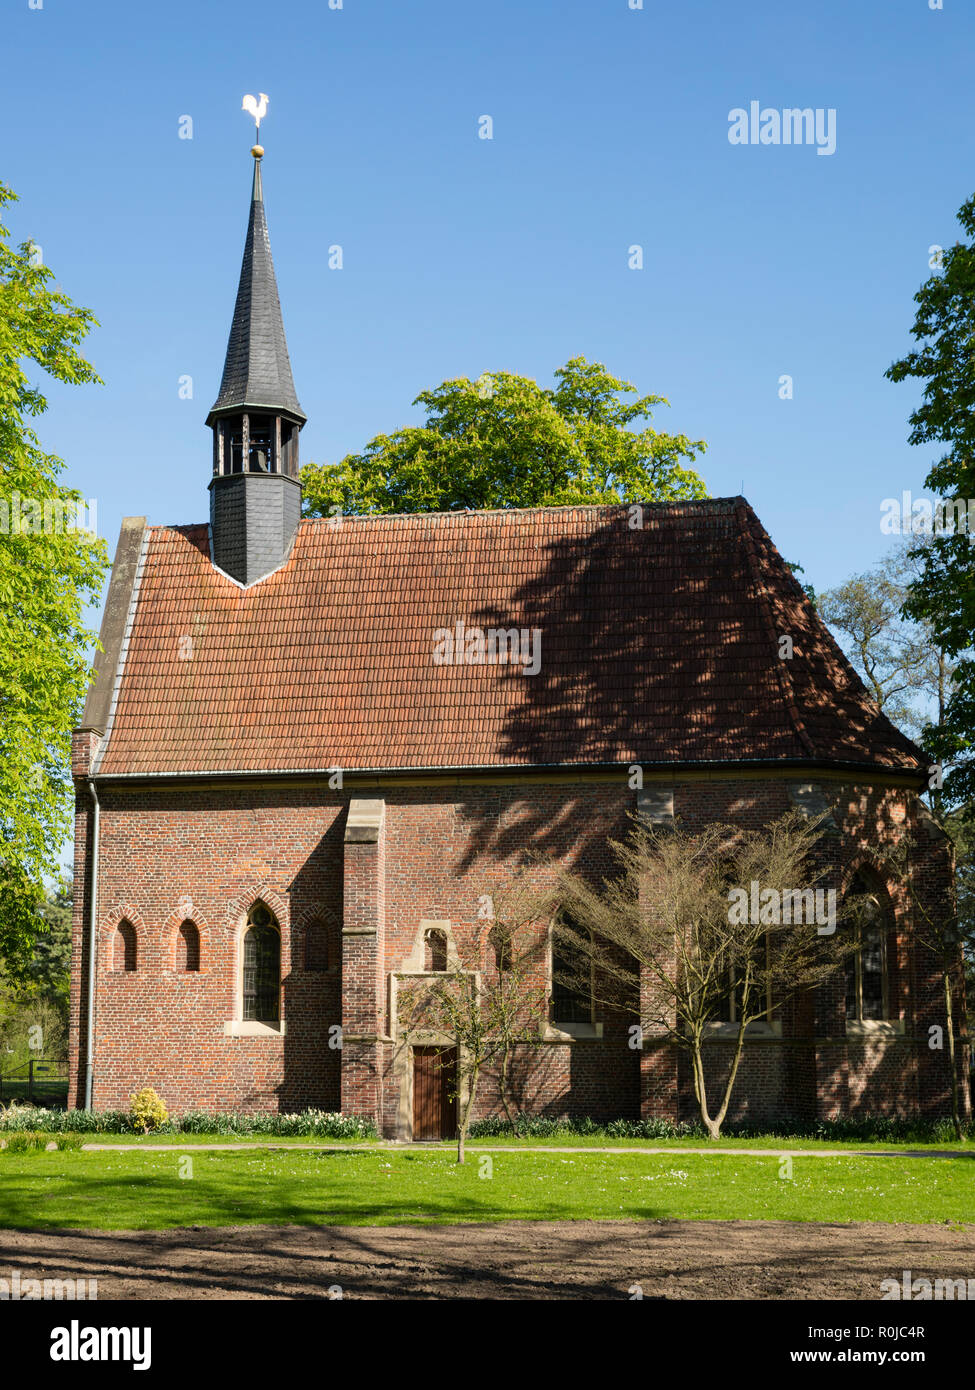 Chapelle, Herne, Ruhr, Nordrhein-Westfalen, Germany, Europe Banque D'Images